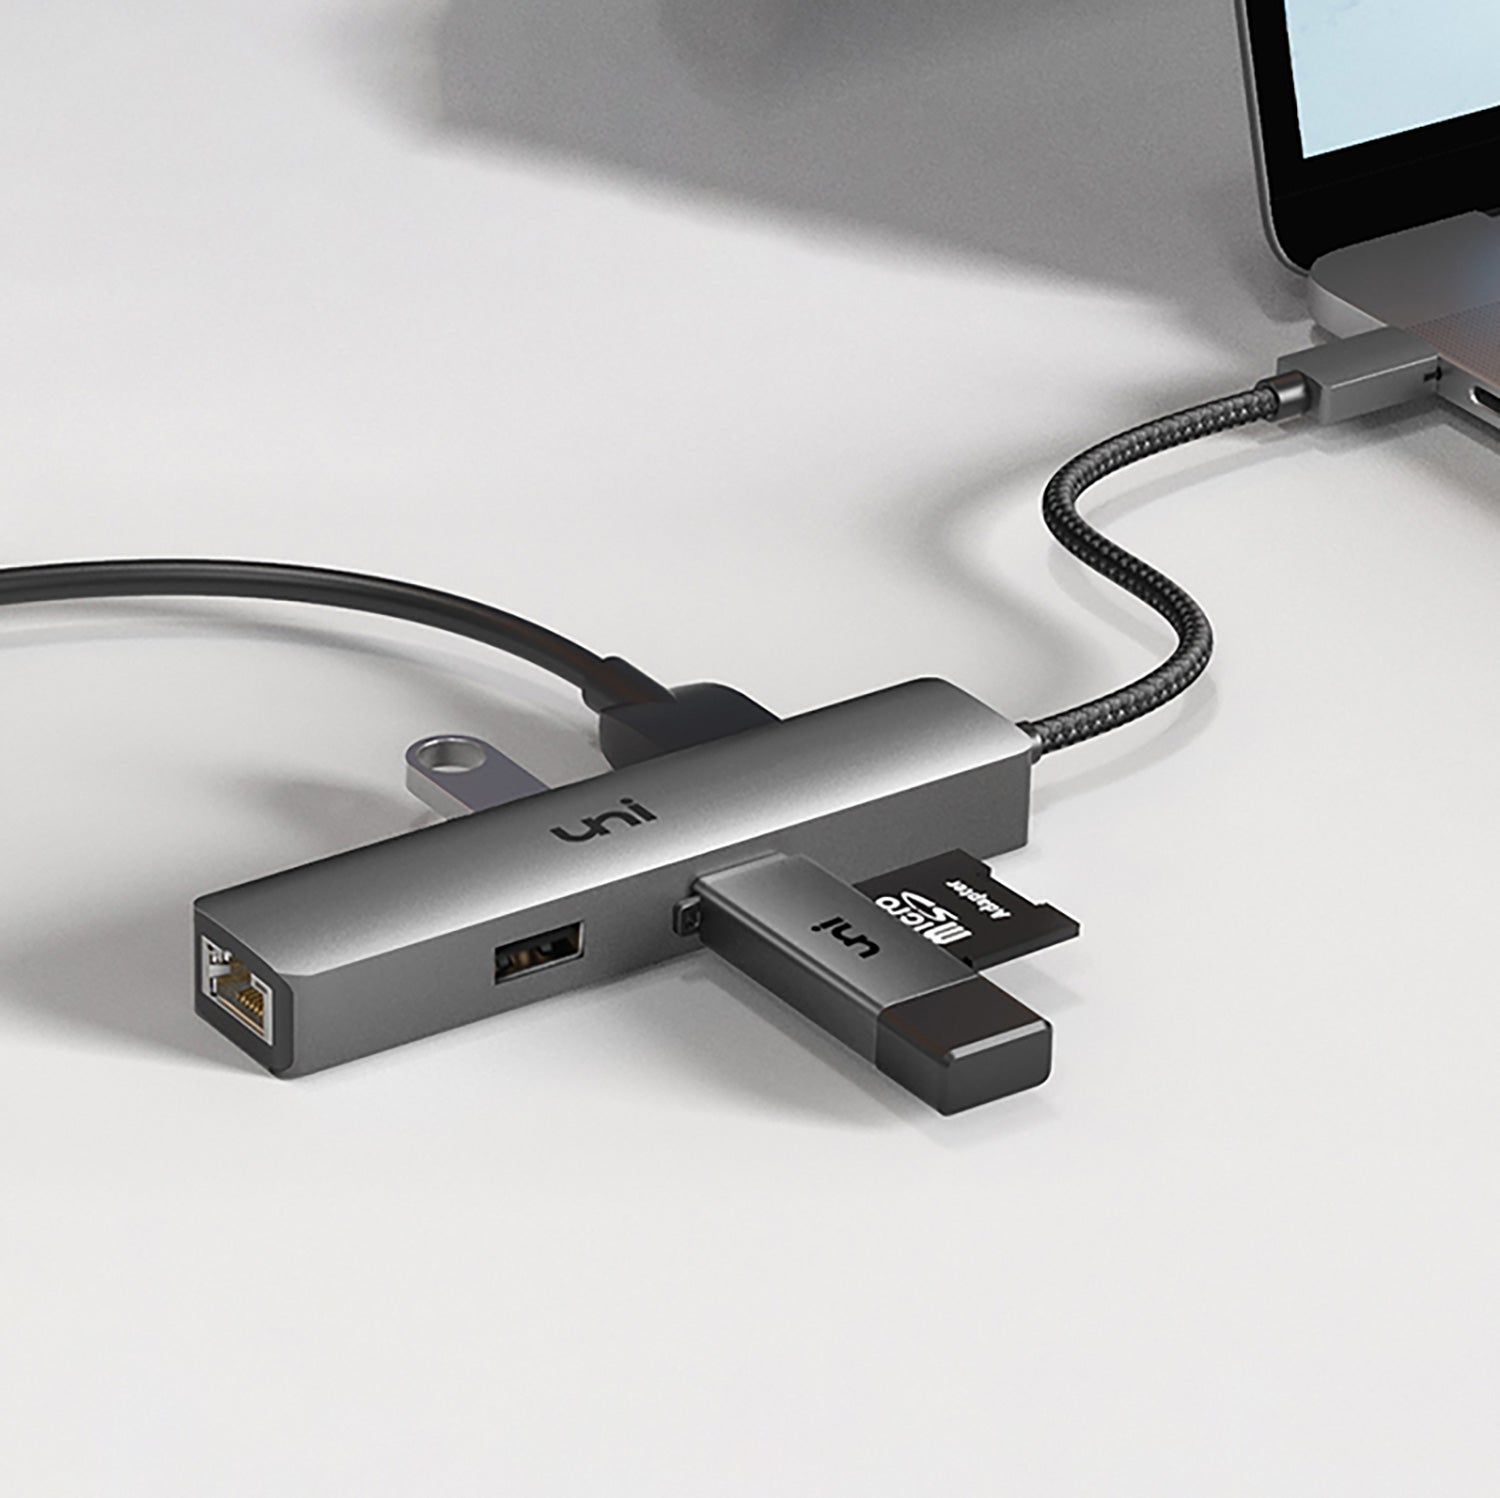 IB CONNECT Prise multiple Intro2 (T13, HDMI, USB de , USB , USB de type C,  USB Typ A / T13, Gris) - Interdiscount